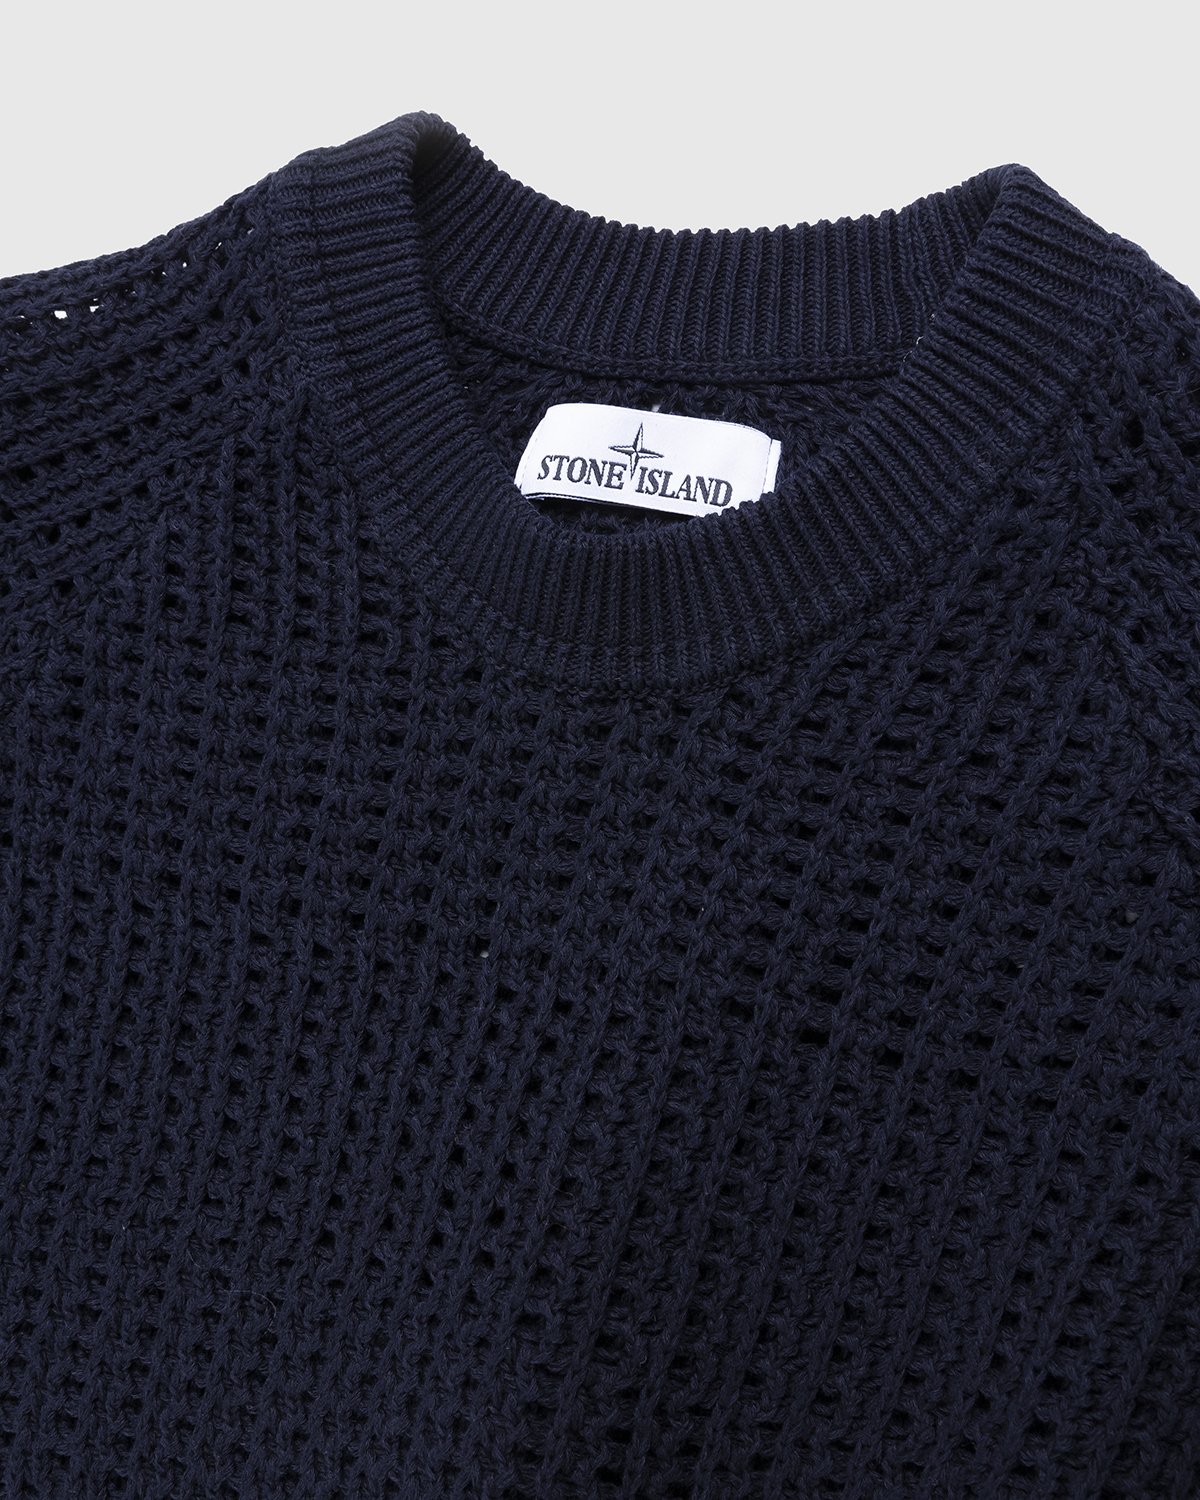 Stone Island - 528D3 Net Stitch Sweater Navy Blue - Clothing - Blue - Image 4